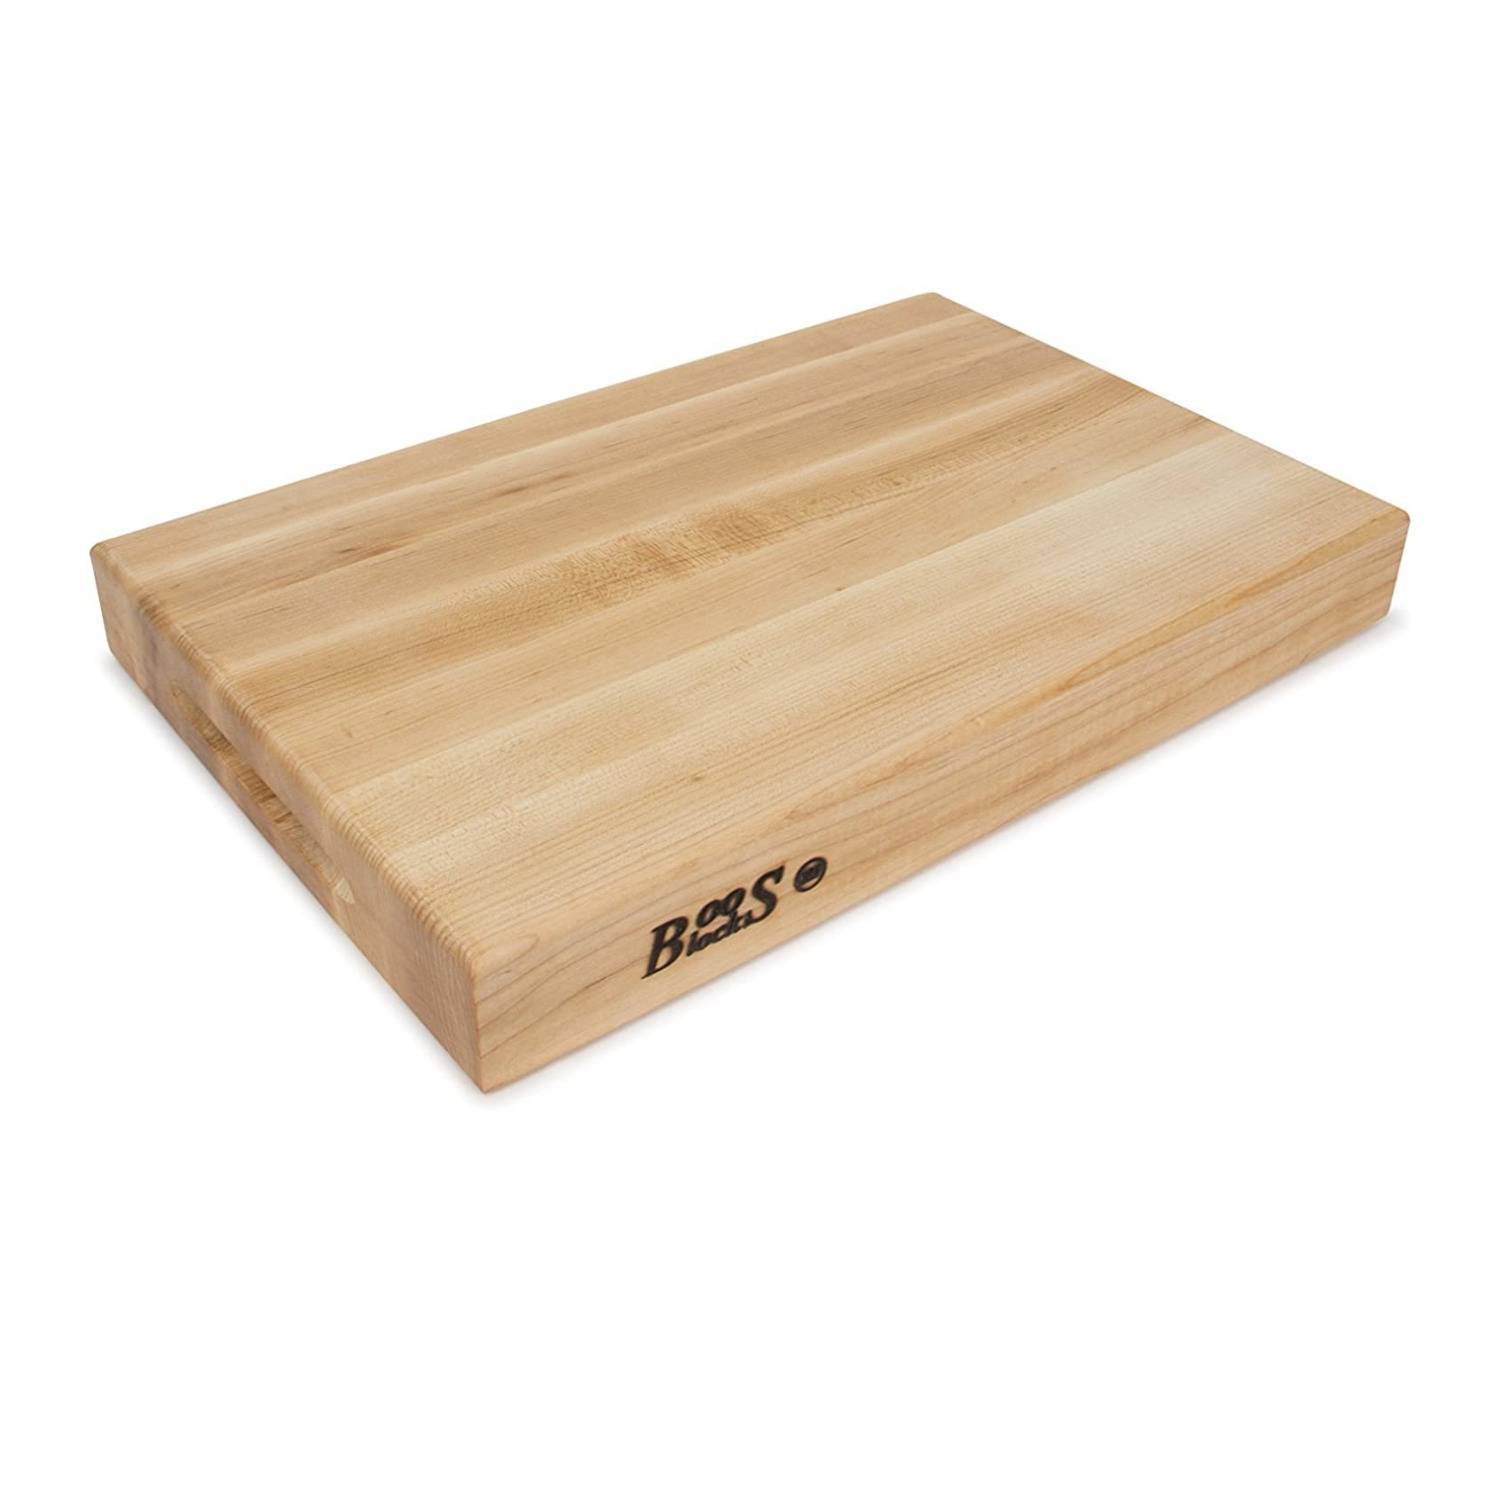 John Boos Block RA01 Maple Wood Edge Grain Reversible Cutting Board (18 x 12 x 2.25 Inches)